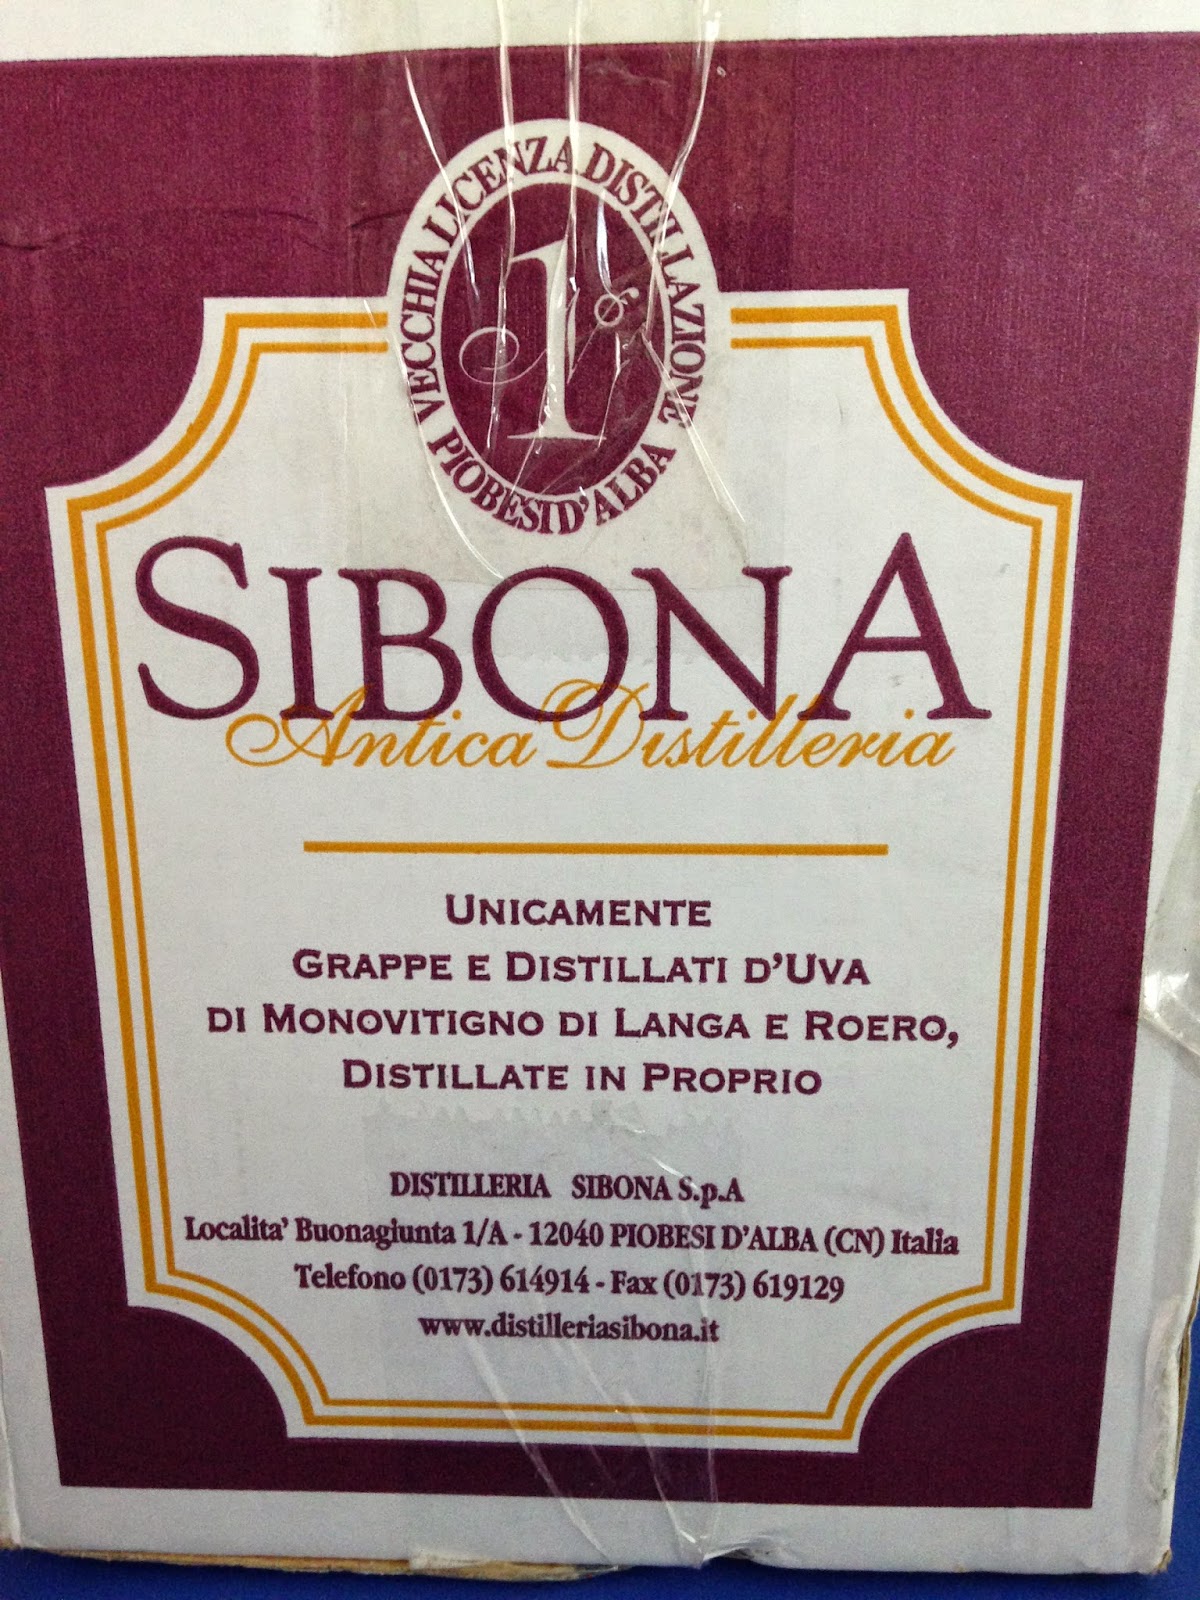 distilleria sibona s.p.a.